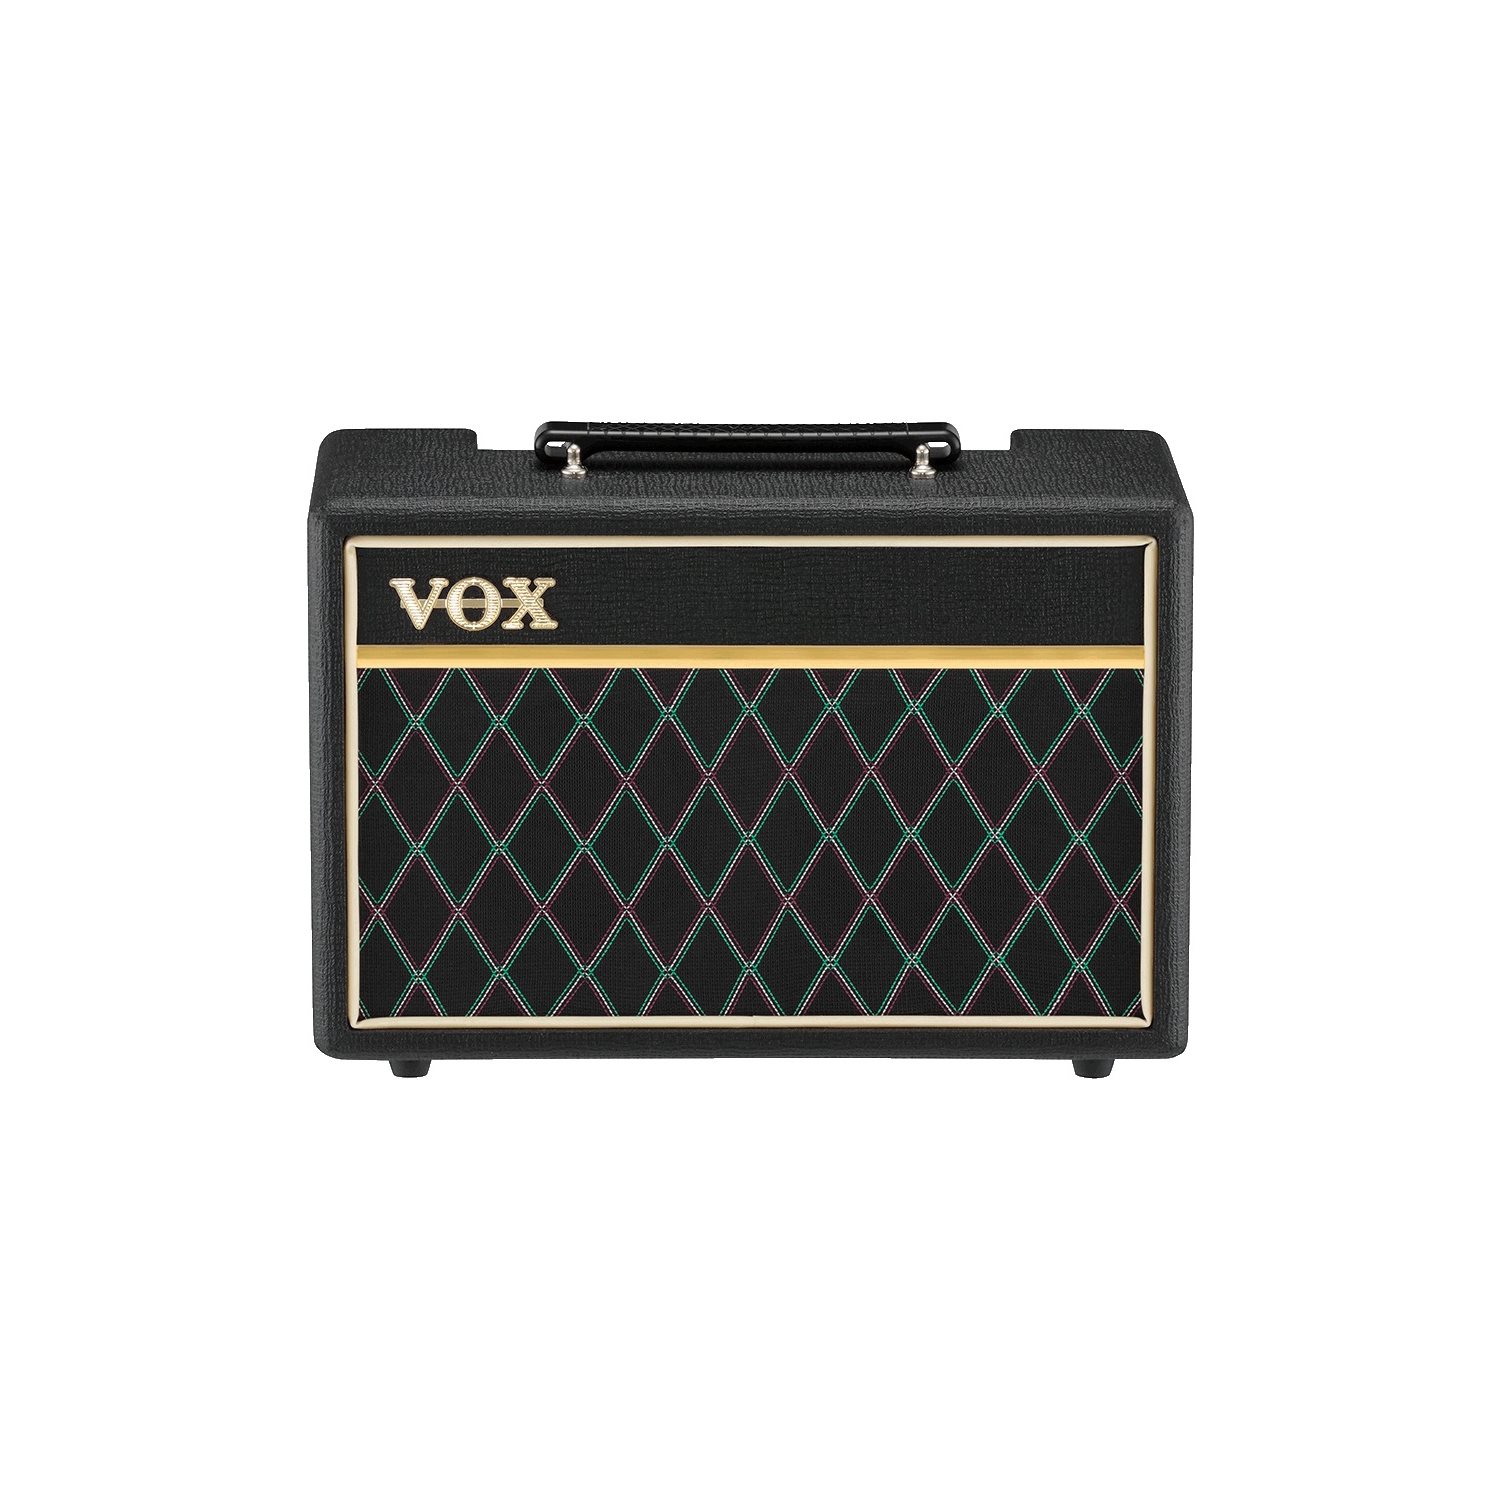 VOX - PATHFINDER 10 watt Bass Combo - Black